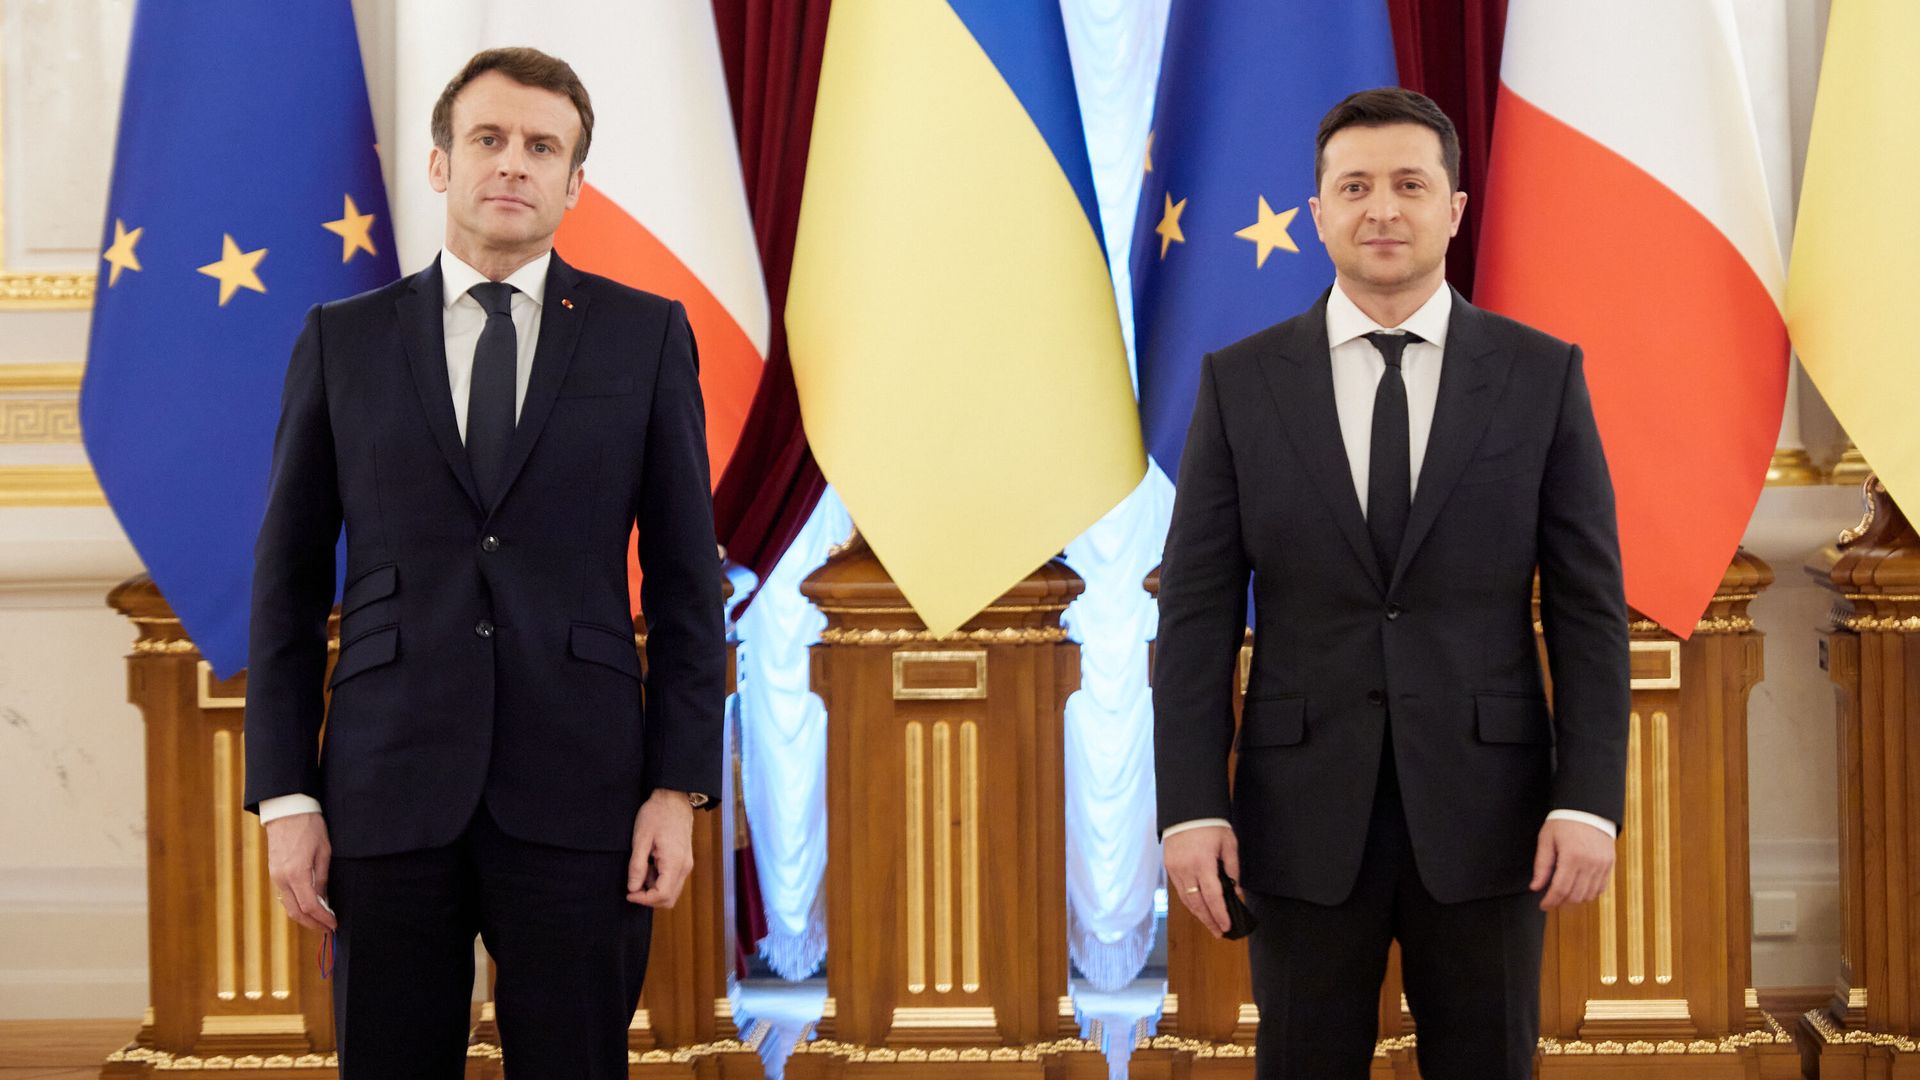 French President Emannuel Macron is seen posing with Ukraine President Volodymyr Zelensky.